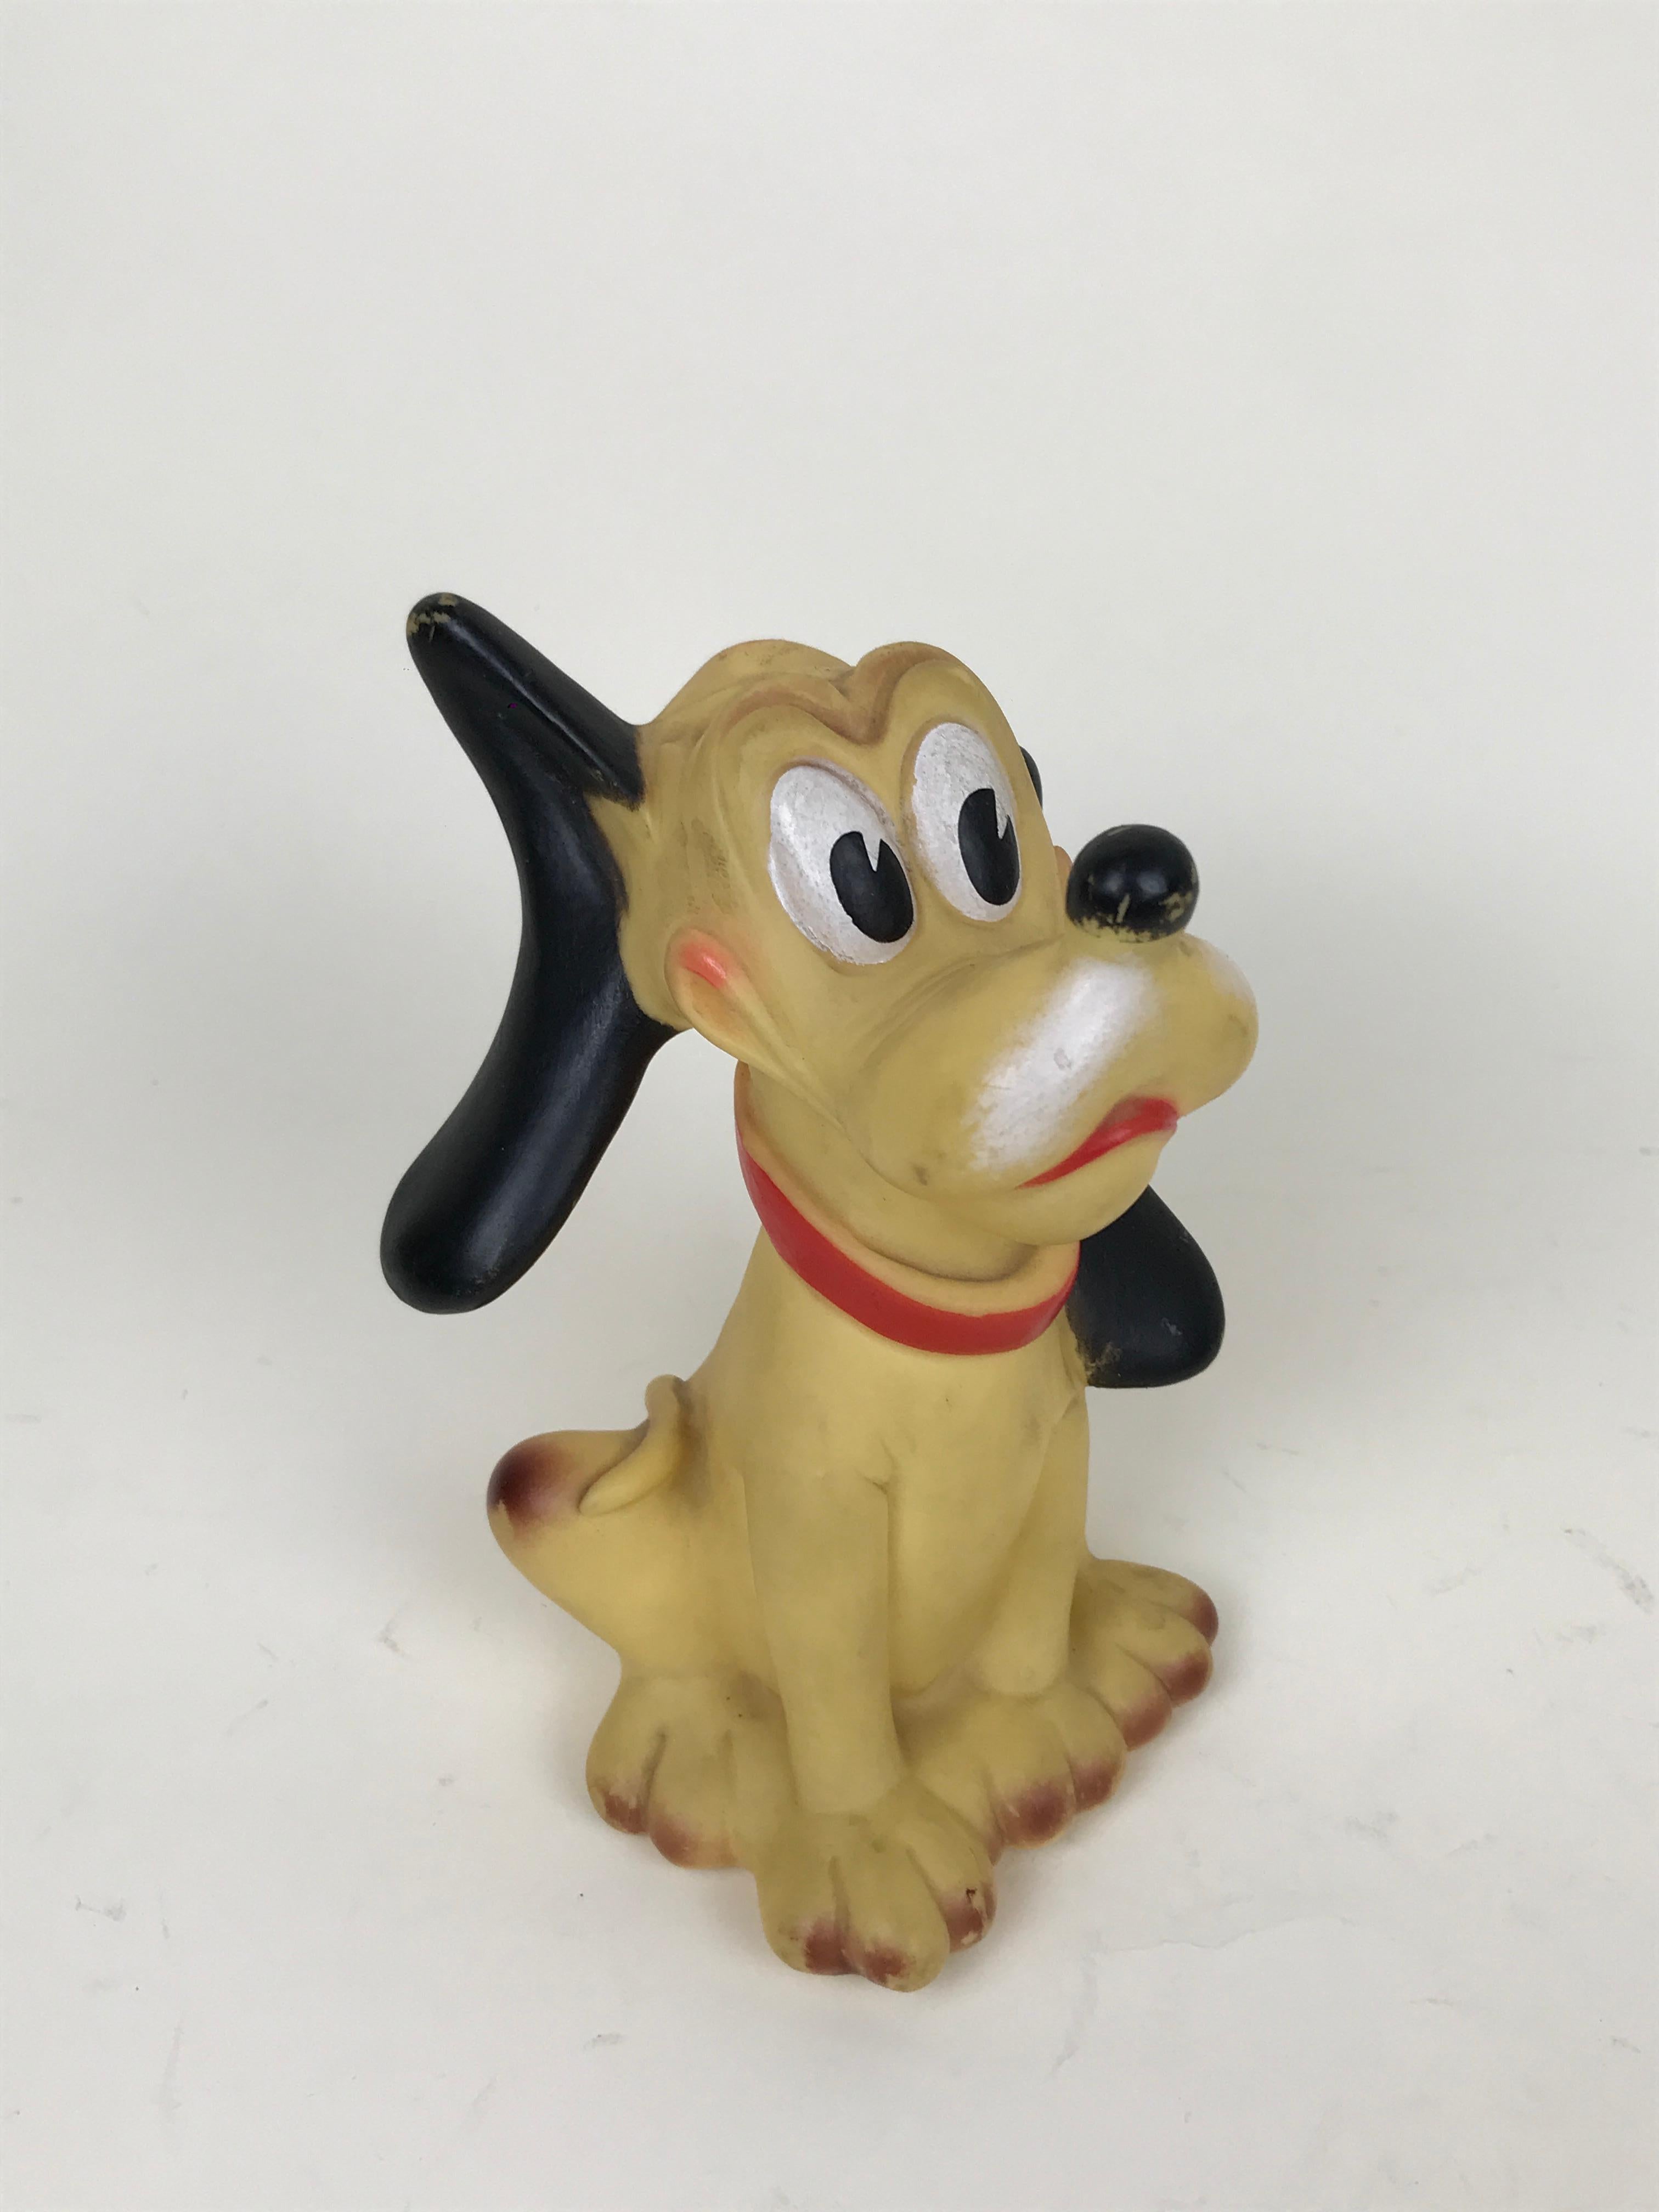 Mid-Century Modern 1960s Vintage Original Disney Pluto Rubber Squeak Toy Made in Italy Ledraplastic